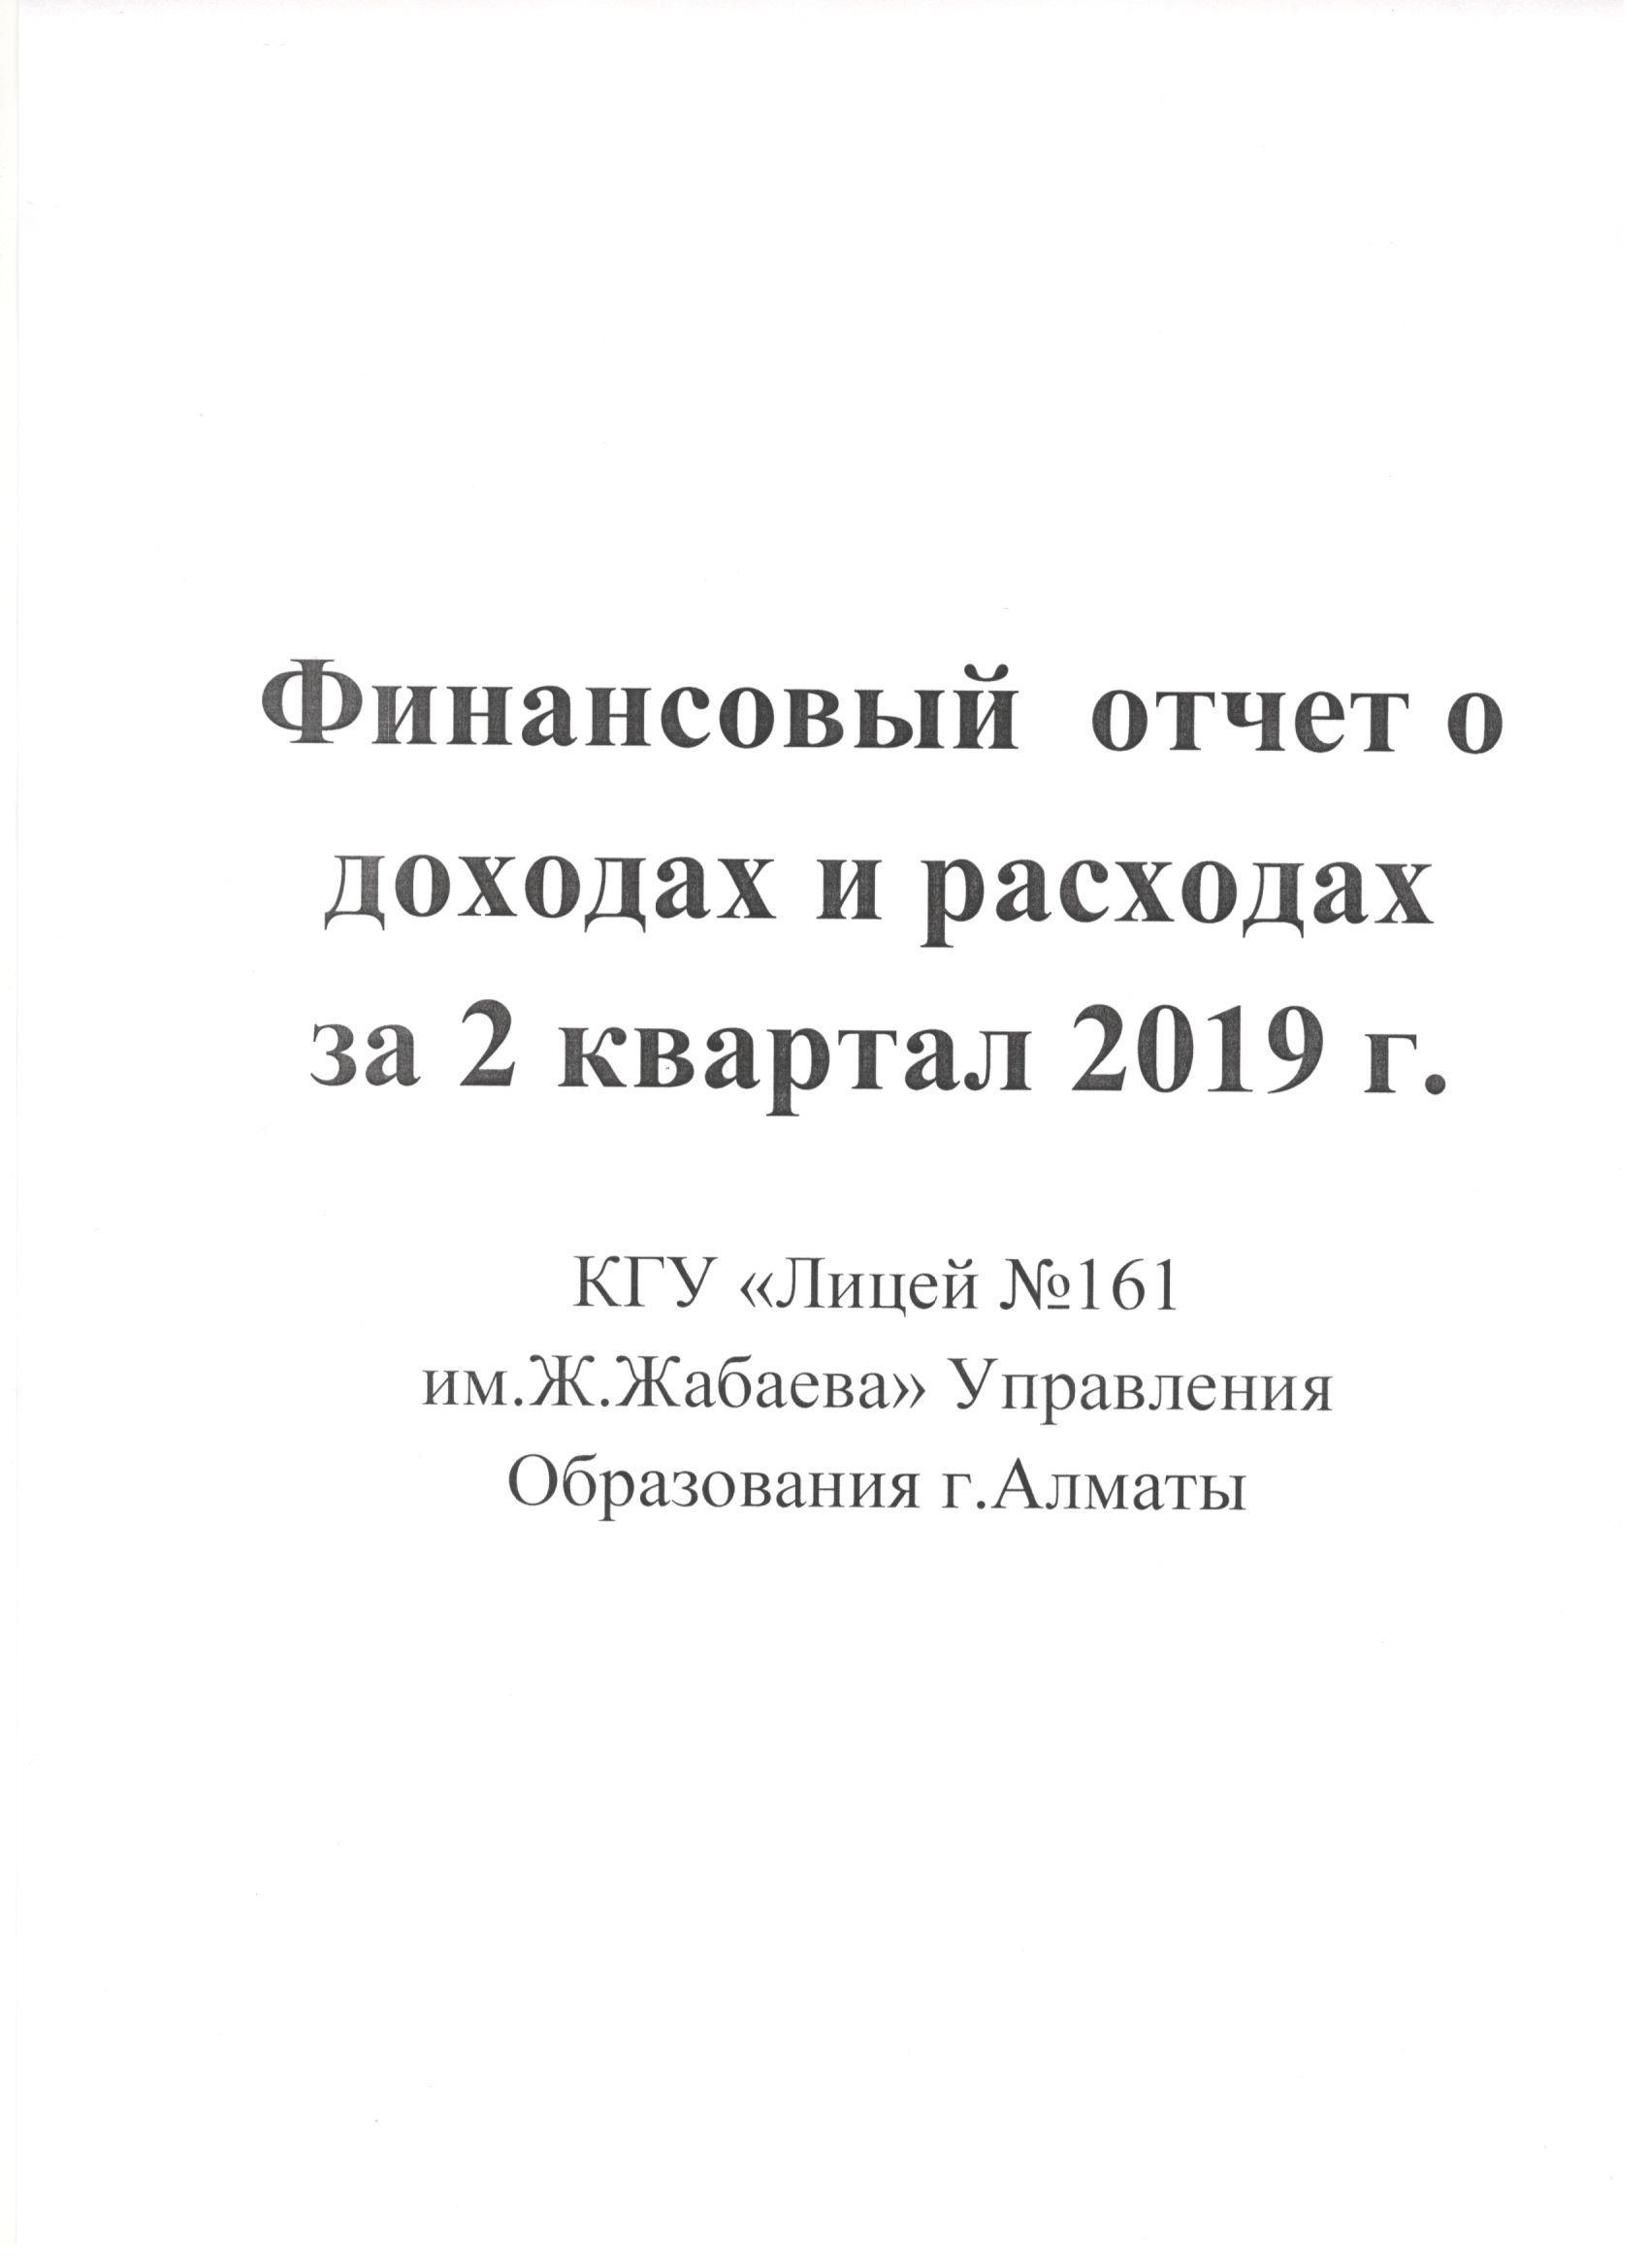 Отчет о доходах и расходах за 2 квартал 2019 год